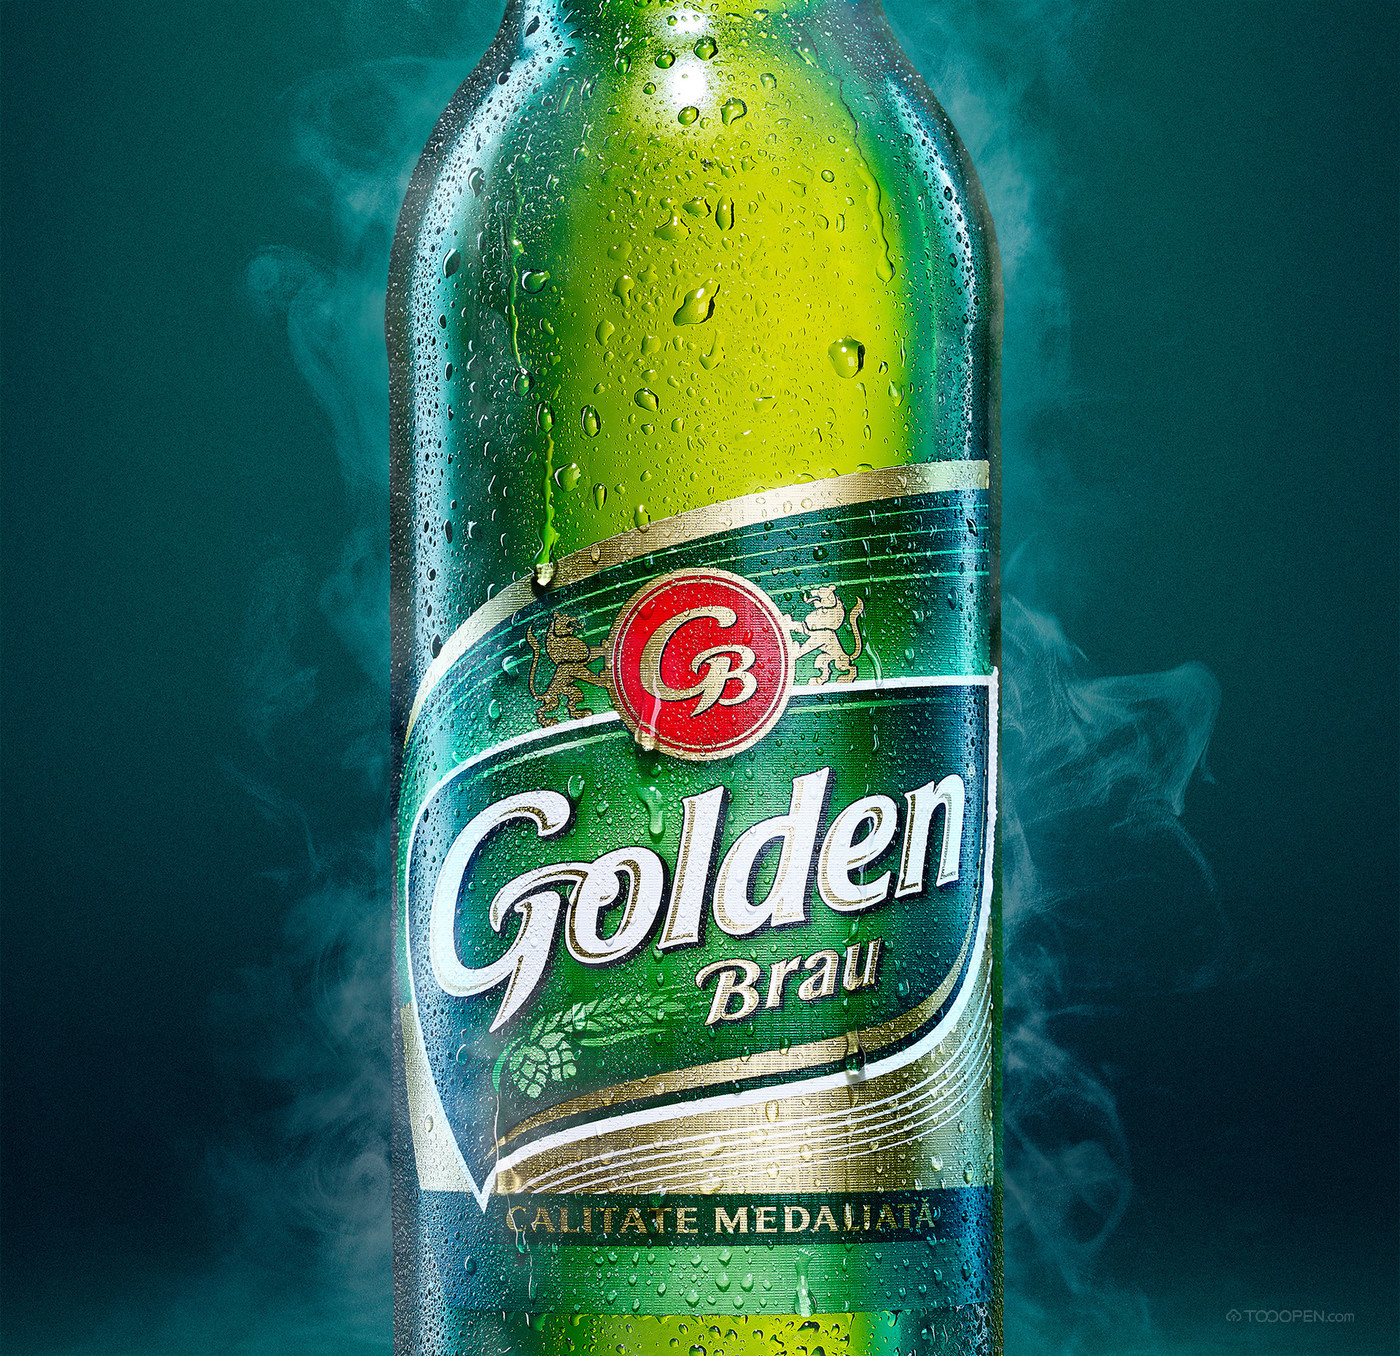 golden brau金布劳啤酒广告海报设计欣赏-04